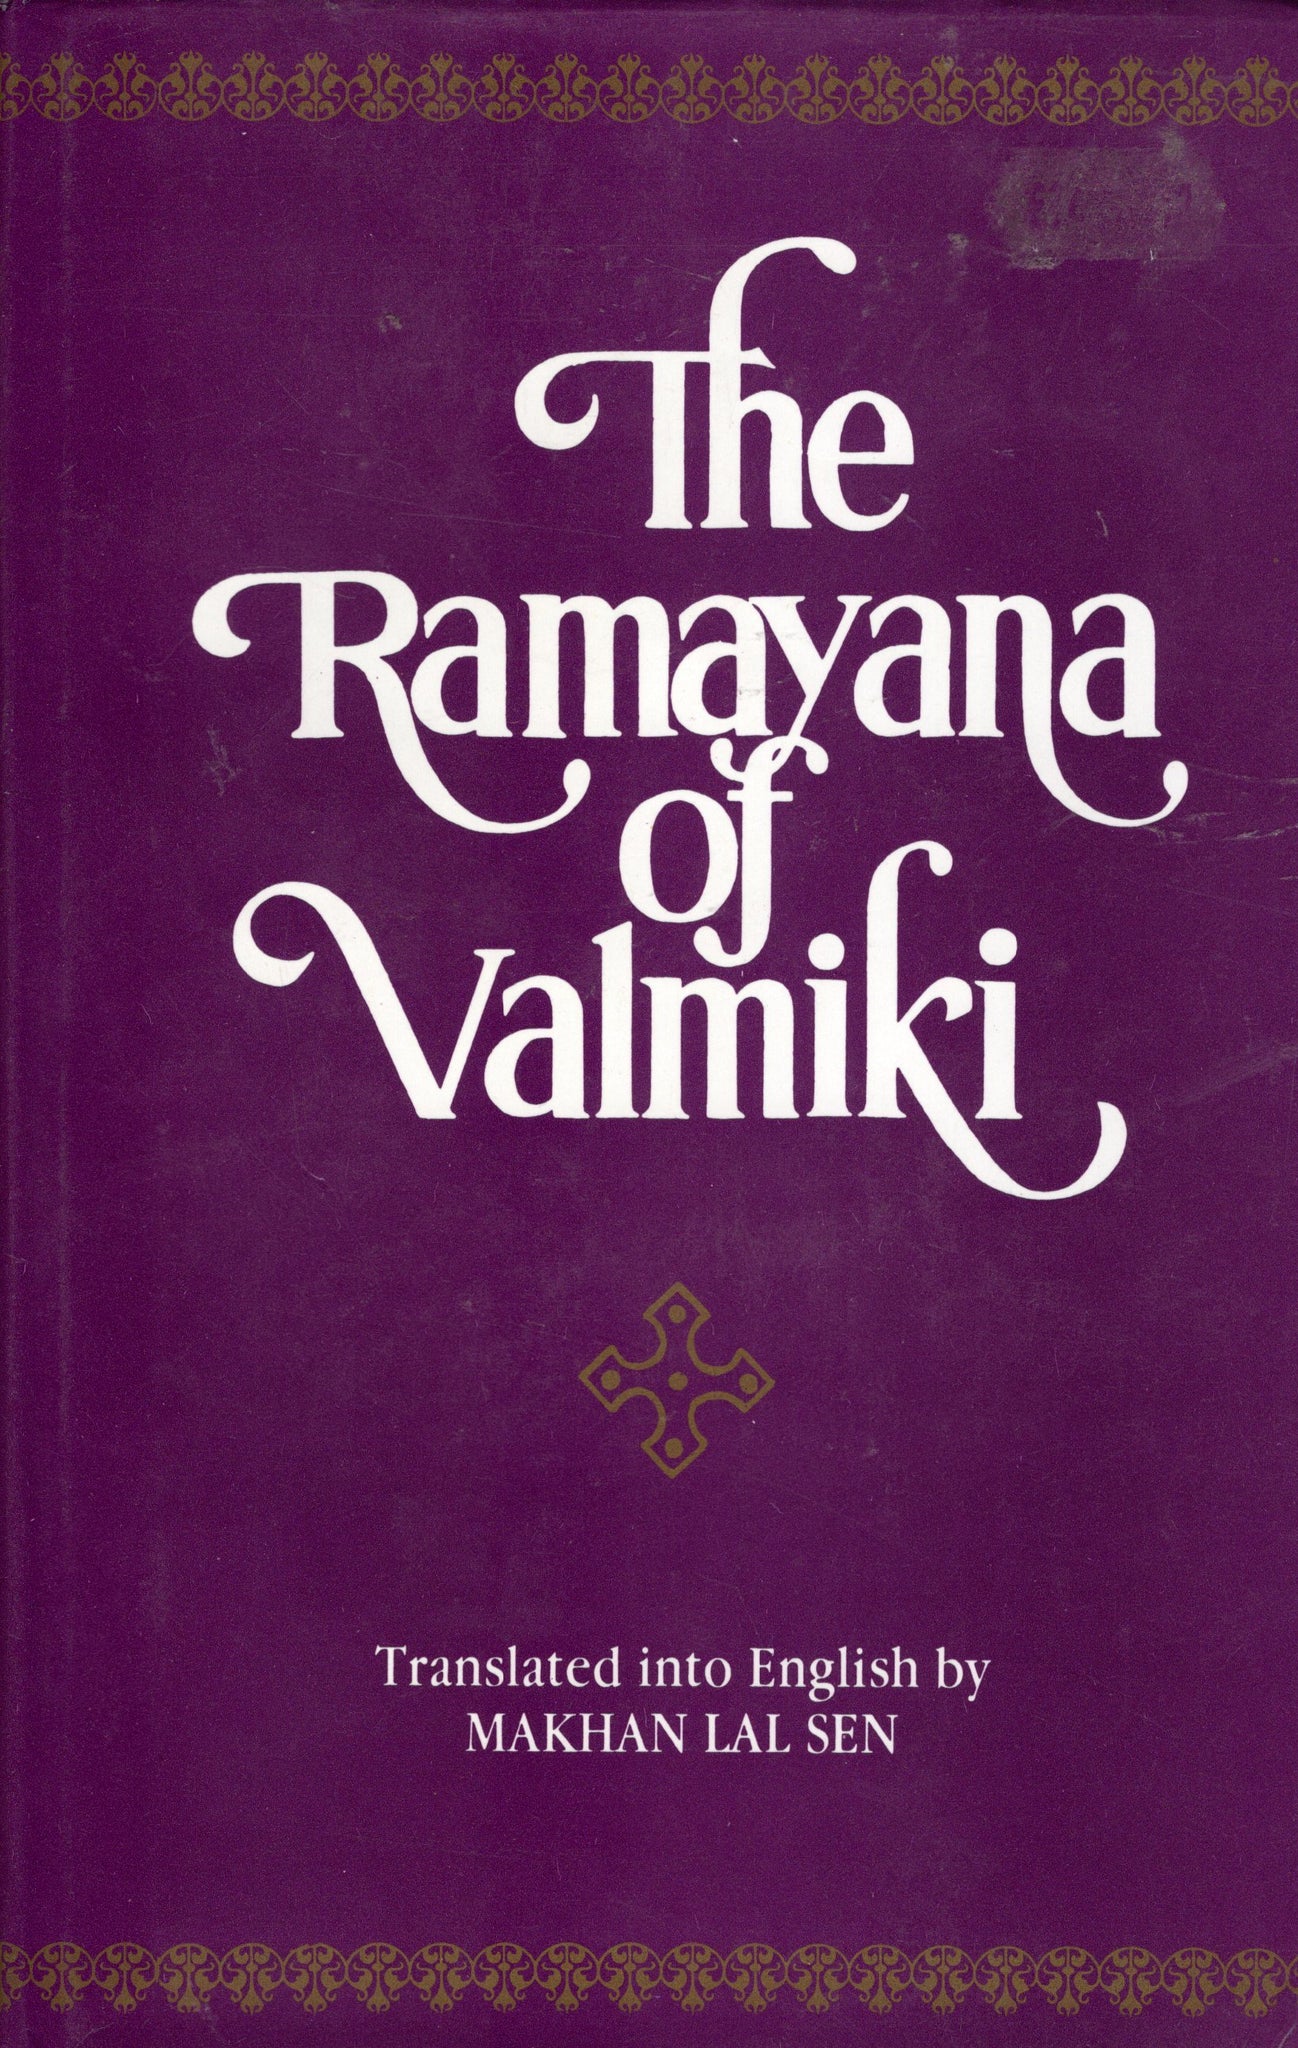 The Ramayana of Valmiki - Translated into English